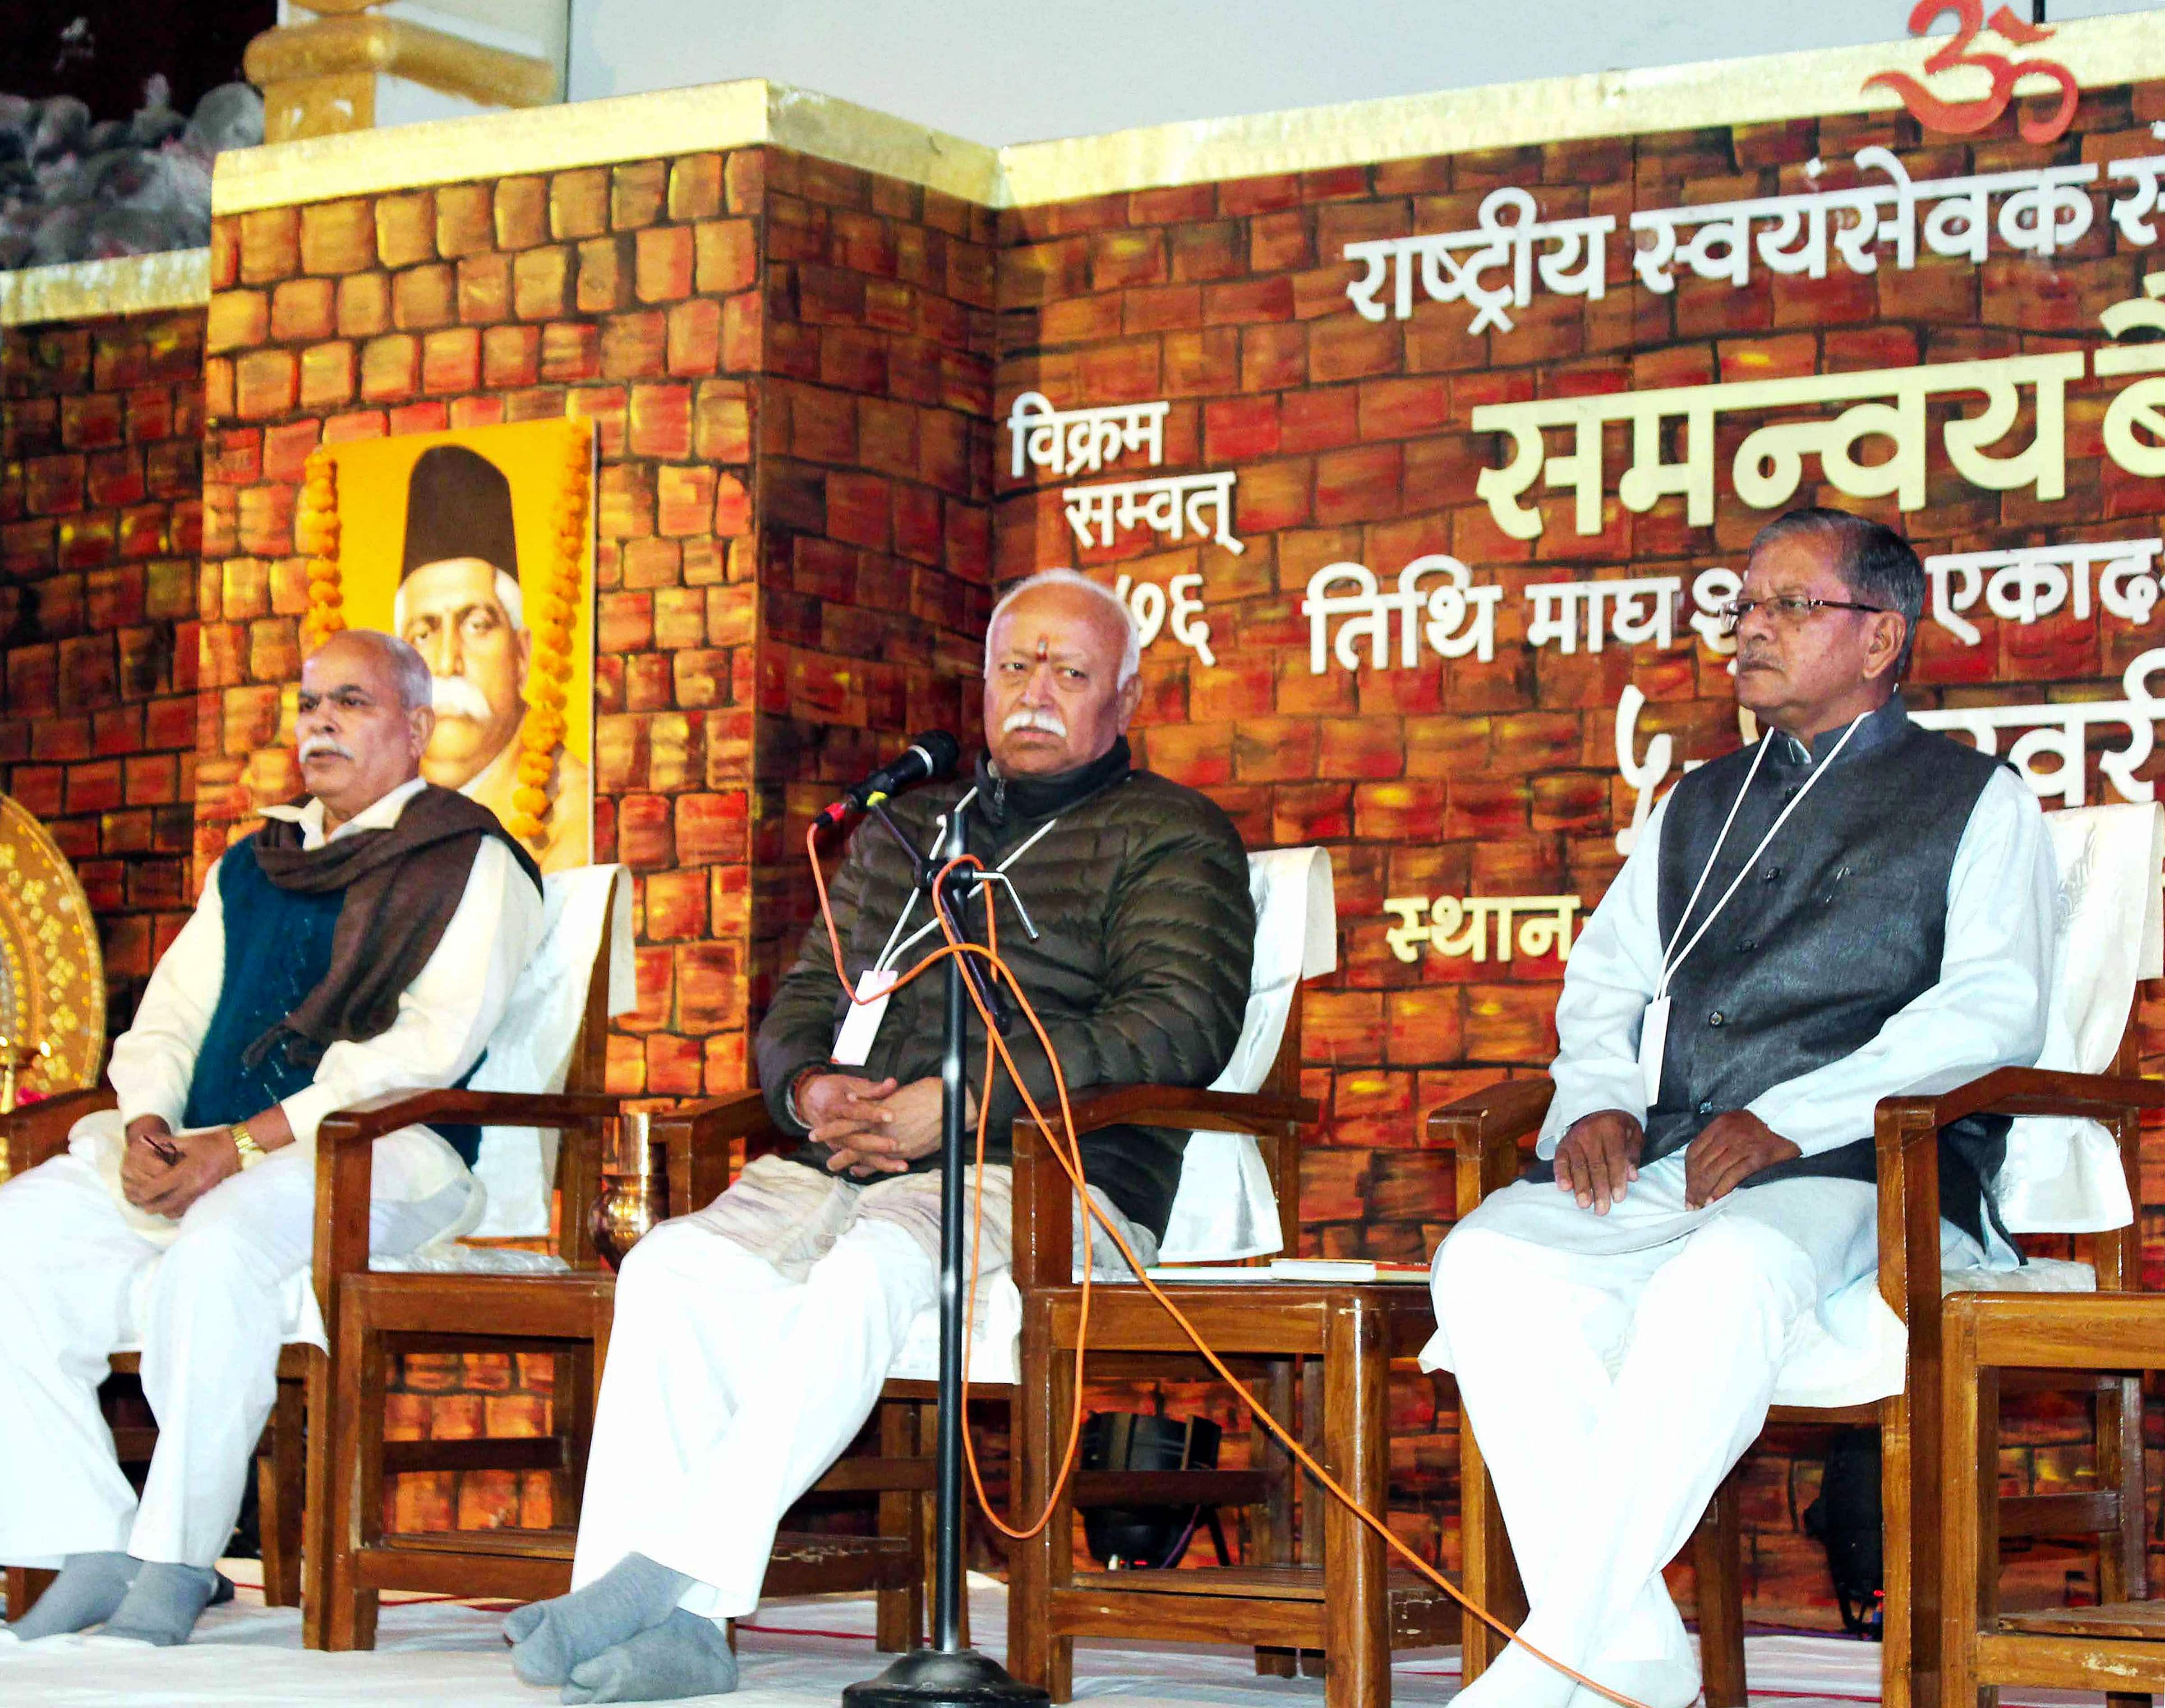 RSS chief Mohan Bhagwat during a meeting at Sharda Vihar in Bhopal. (Credit: PTI Photo)